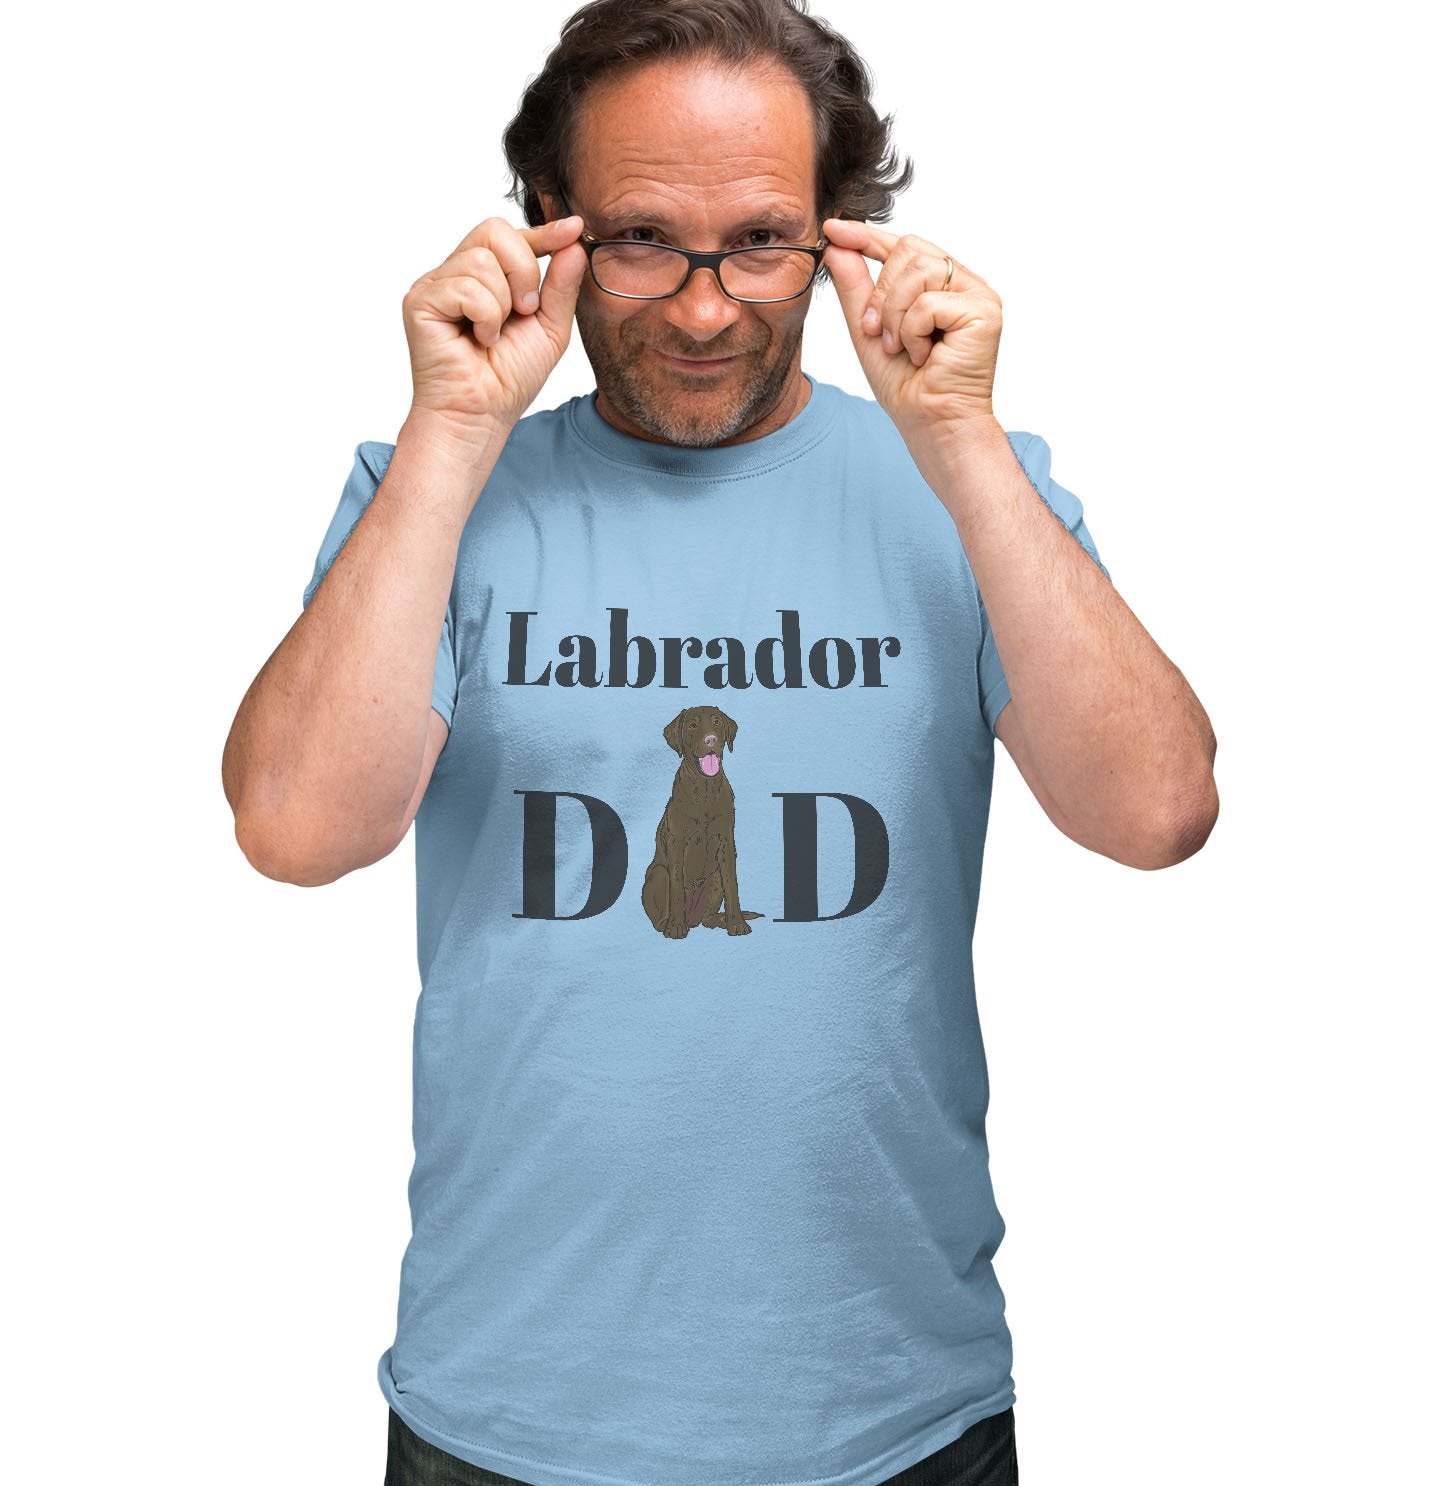 Labradors.com - Chocolate Labrador Dad Illustration - Adult Unisex T-Shirt